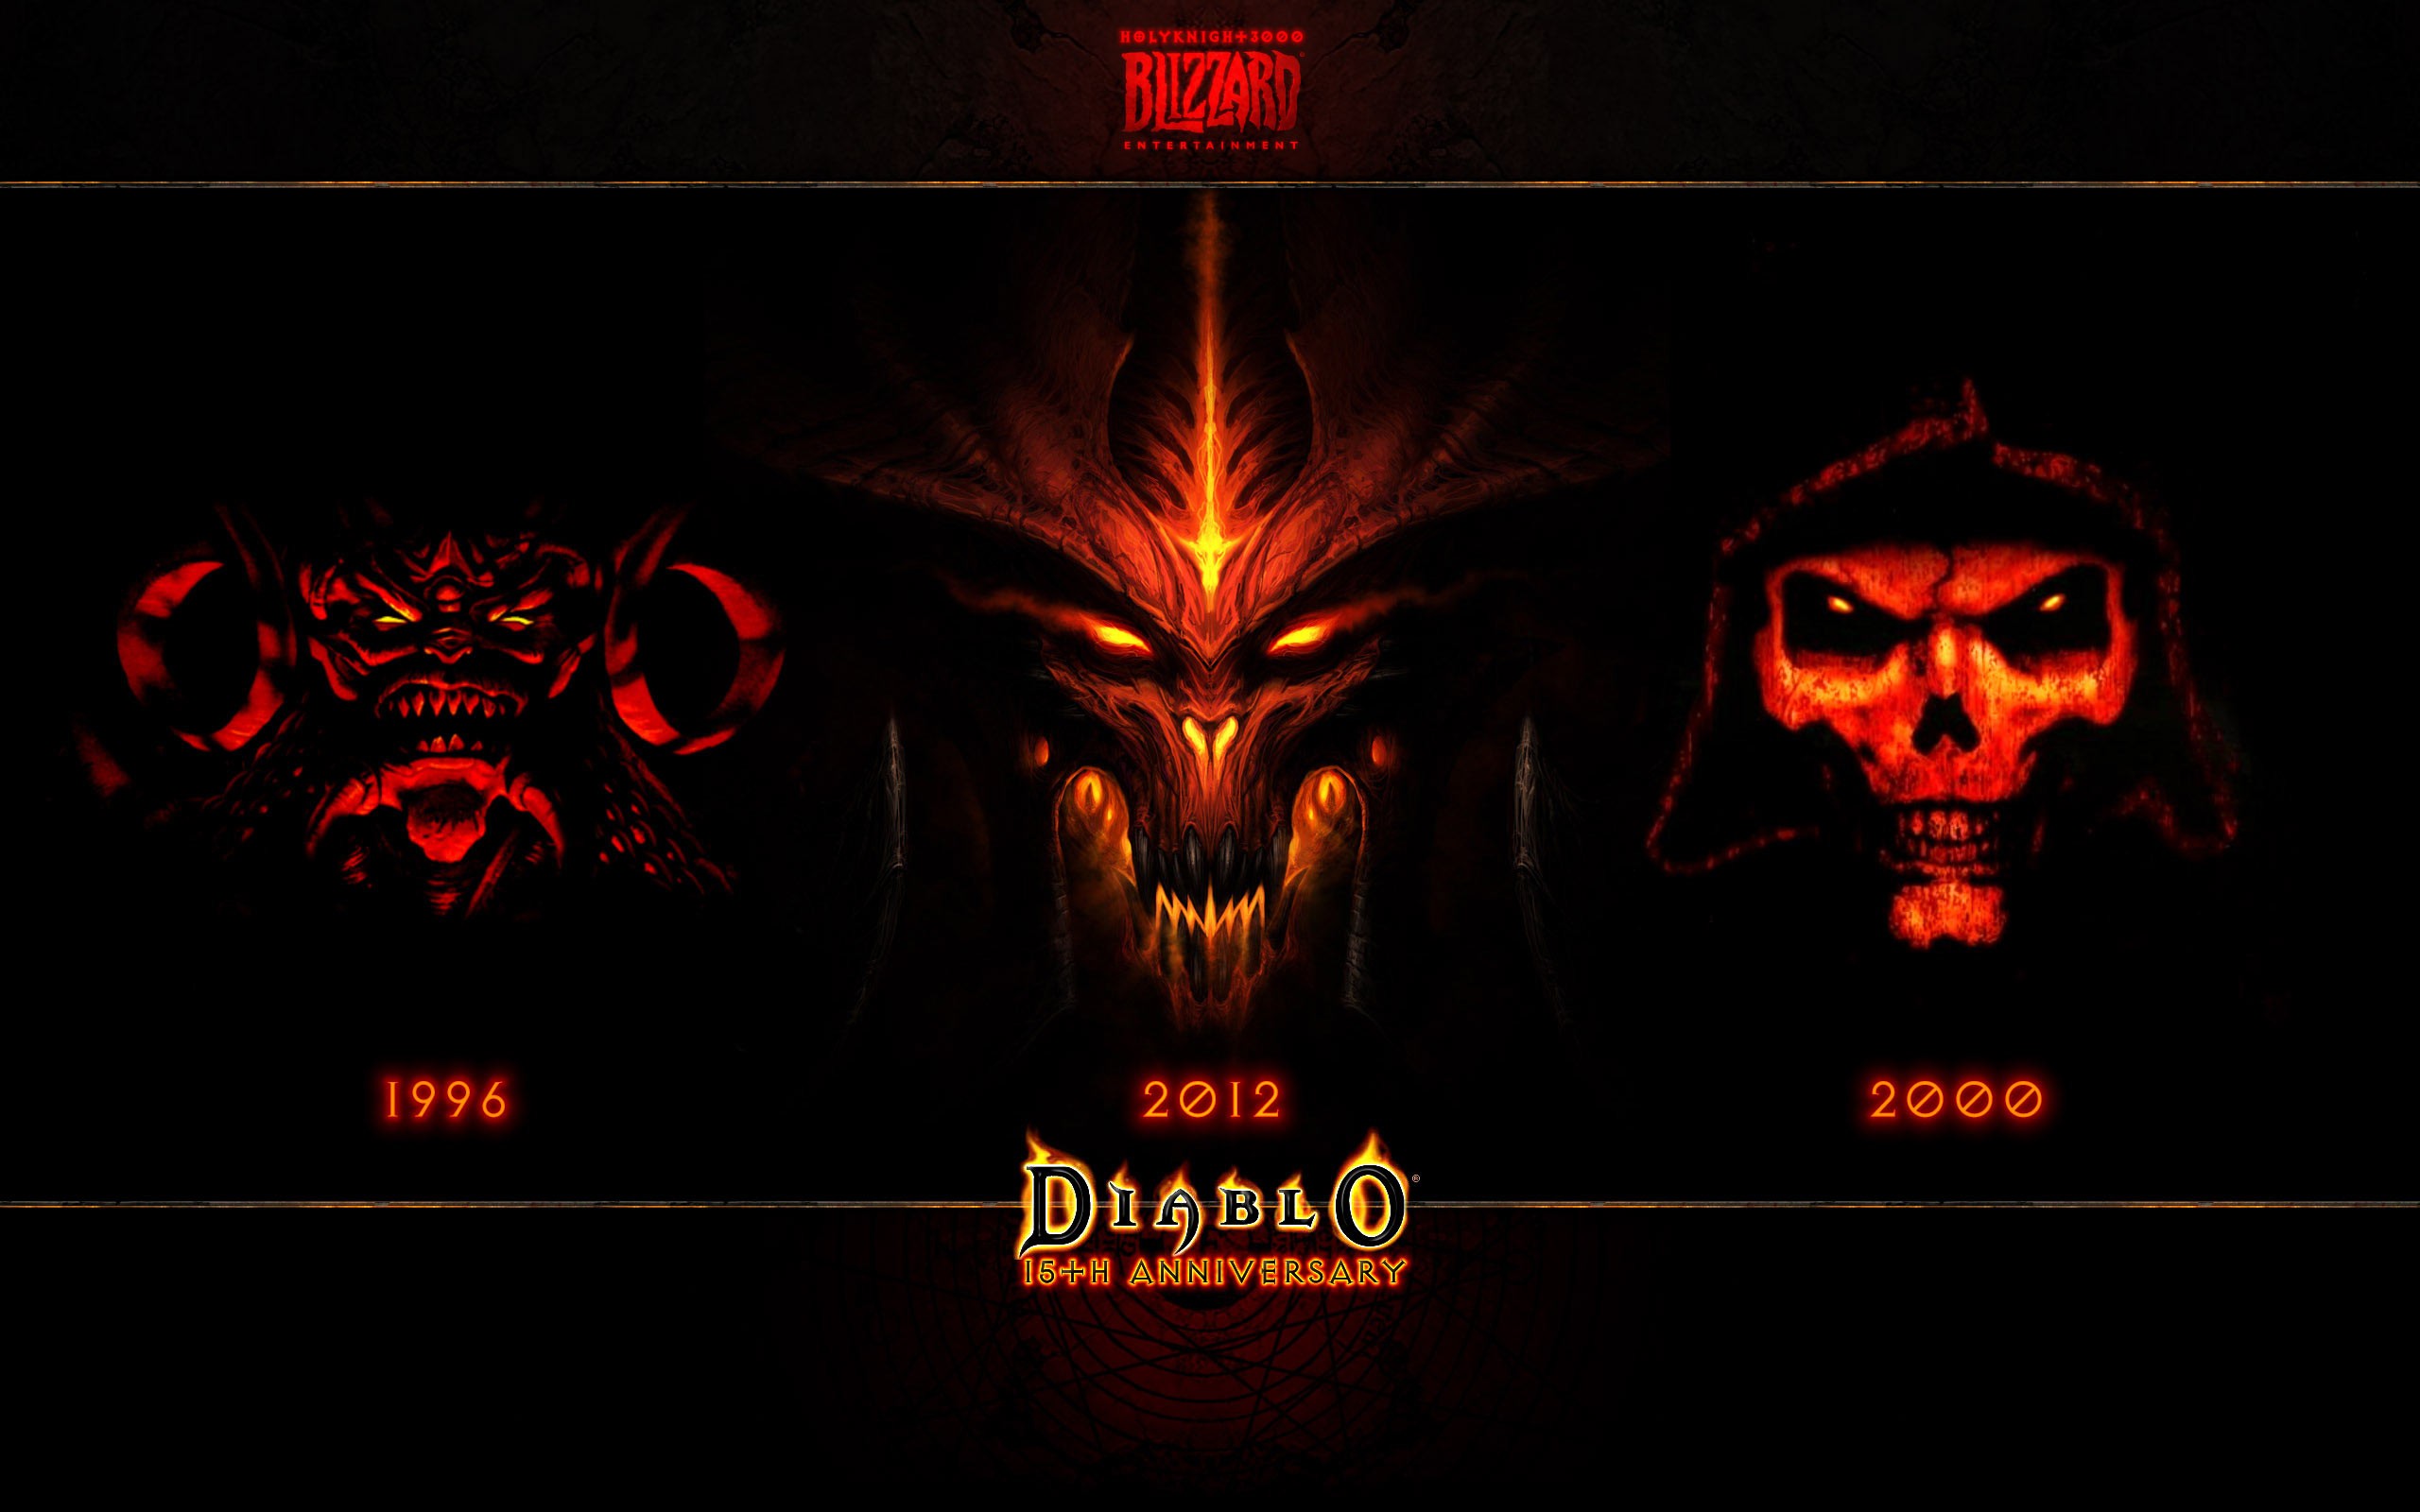 General 2560x1600 Diablo video games Blizzard Entertainment fantasy art artwork digital art 1996 (Year) 2012 (Year) 2000 (Year) video game art PC gaming demon glowing eyes skull